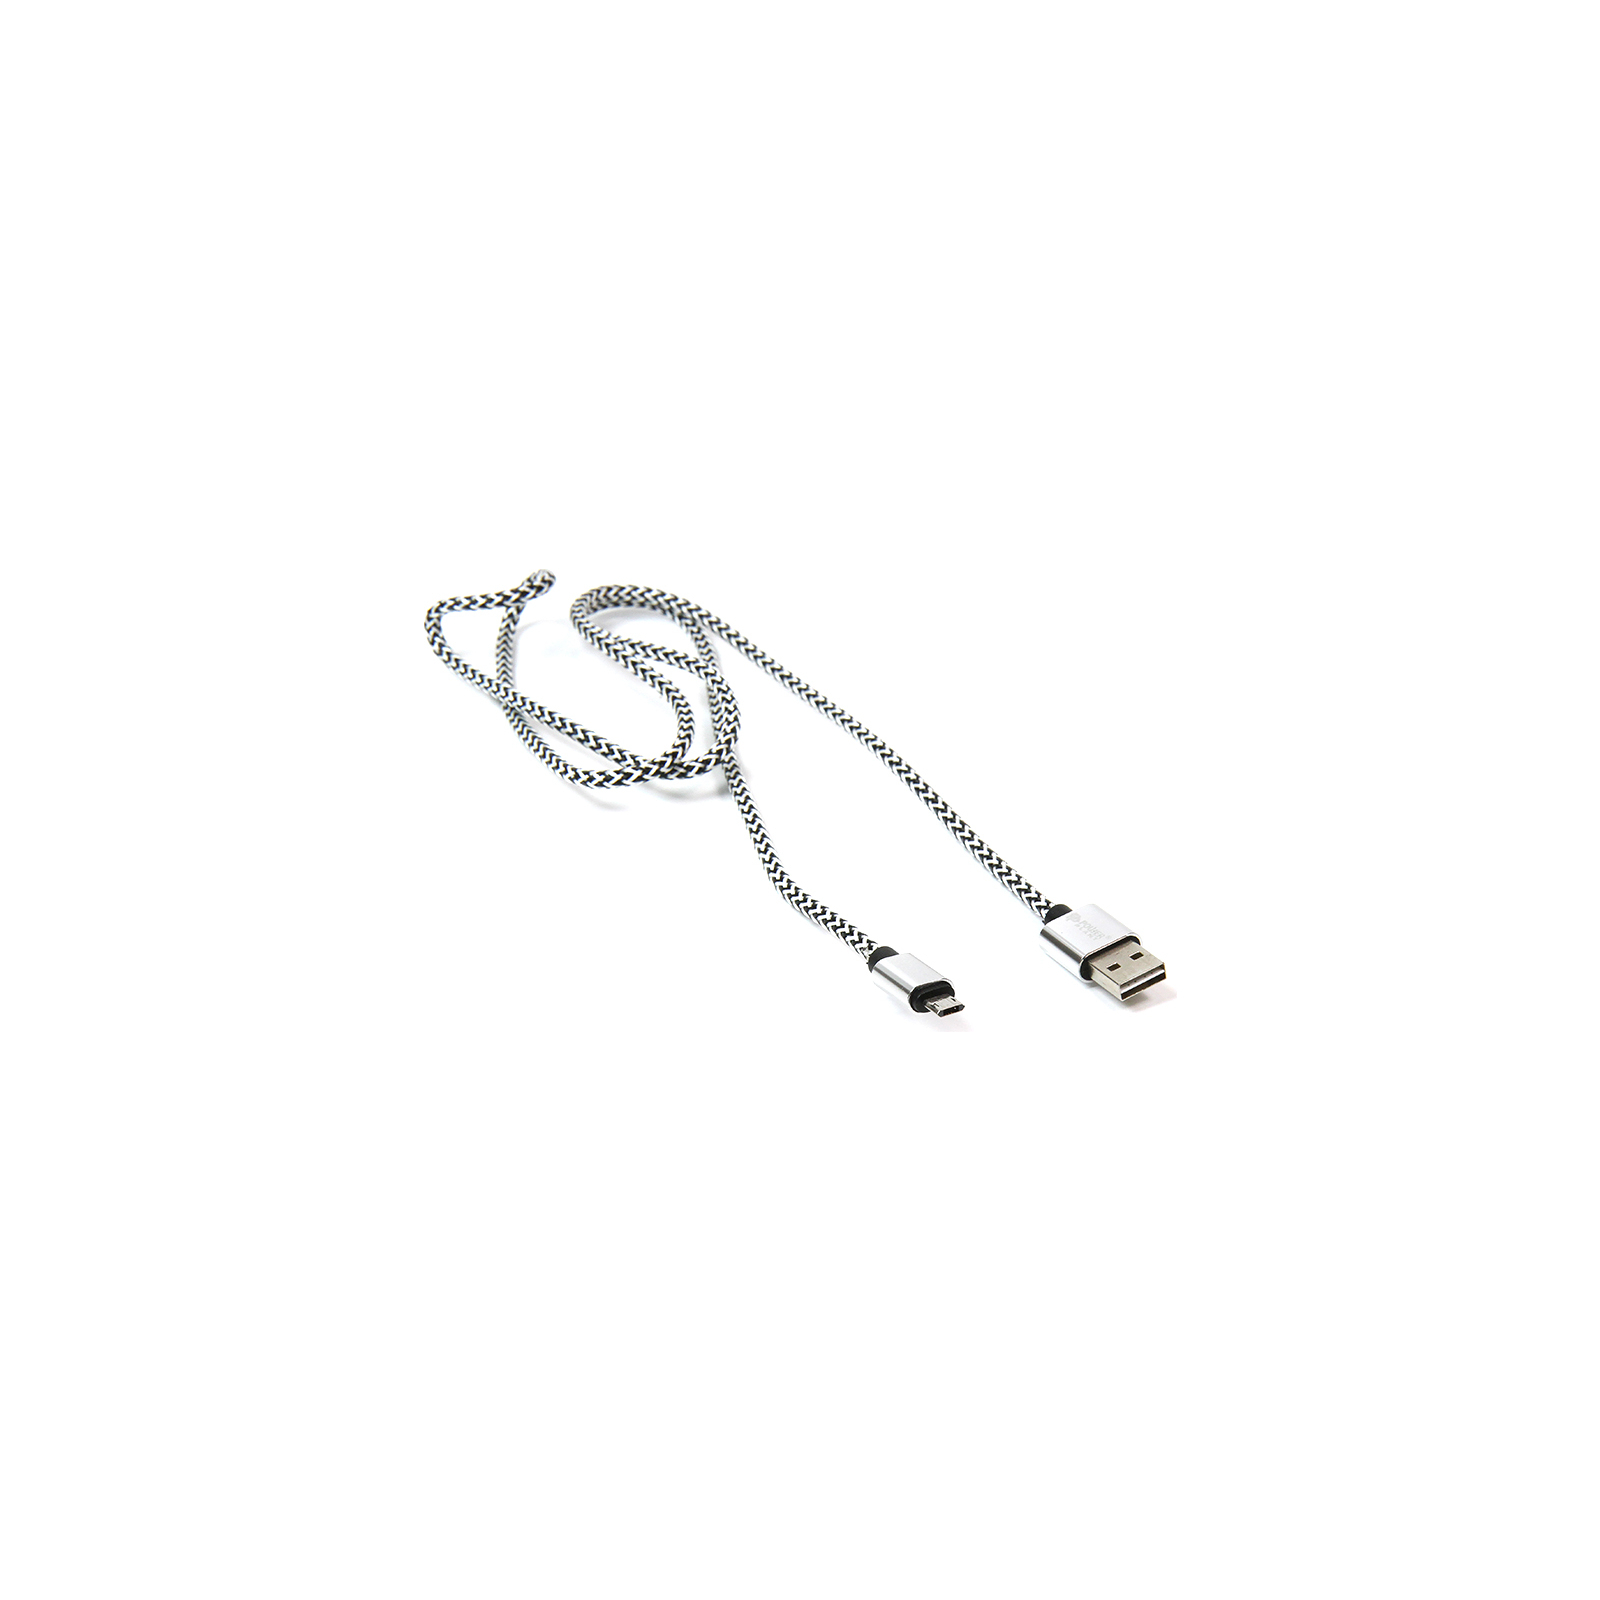 Дата кабель USB 2.0 AM to Micro 5P 1.0m PowerPlant (CA910212)